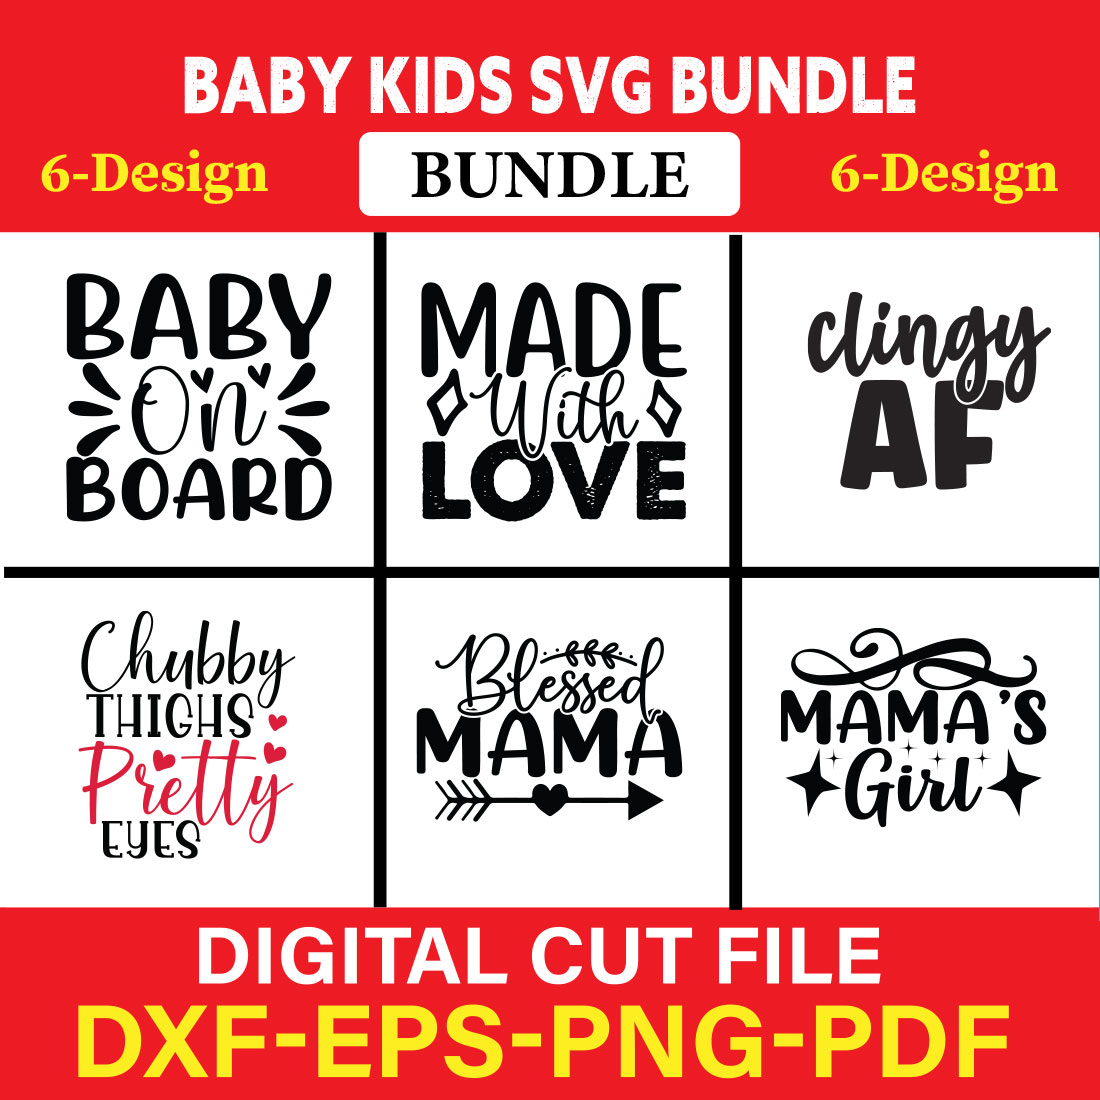 Baby Kids T-shirt Design Bundle Vol-4 cover image.